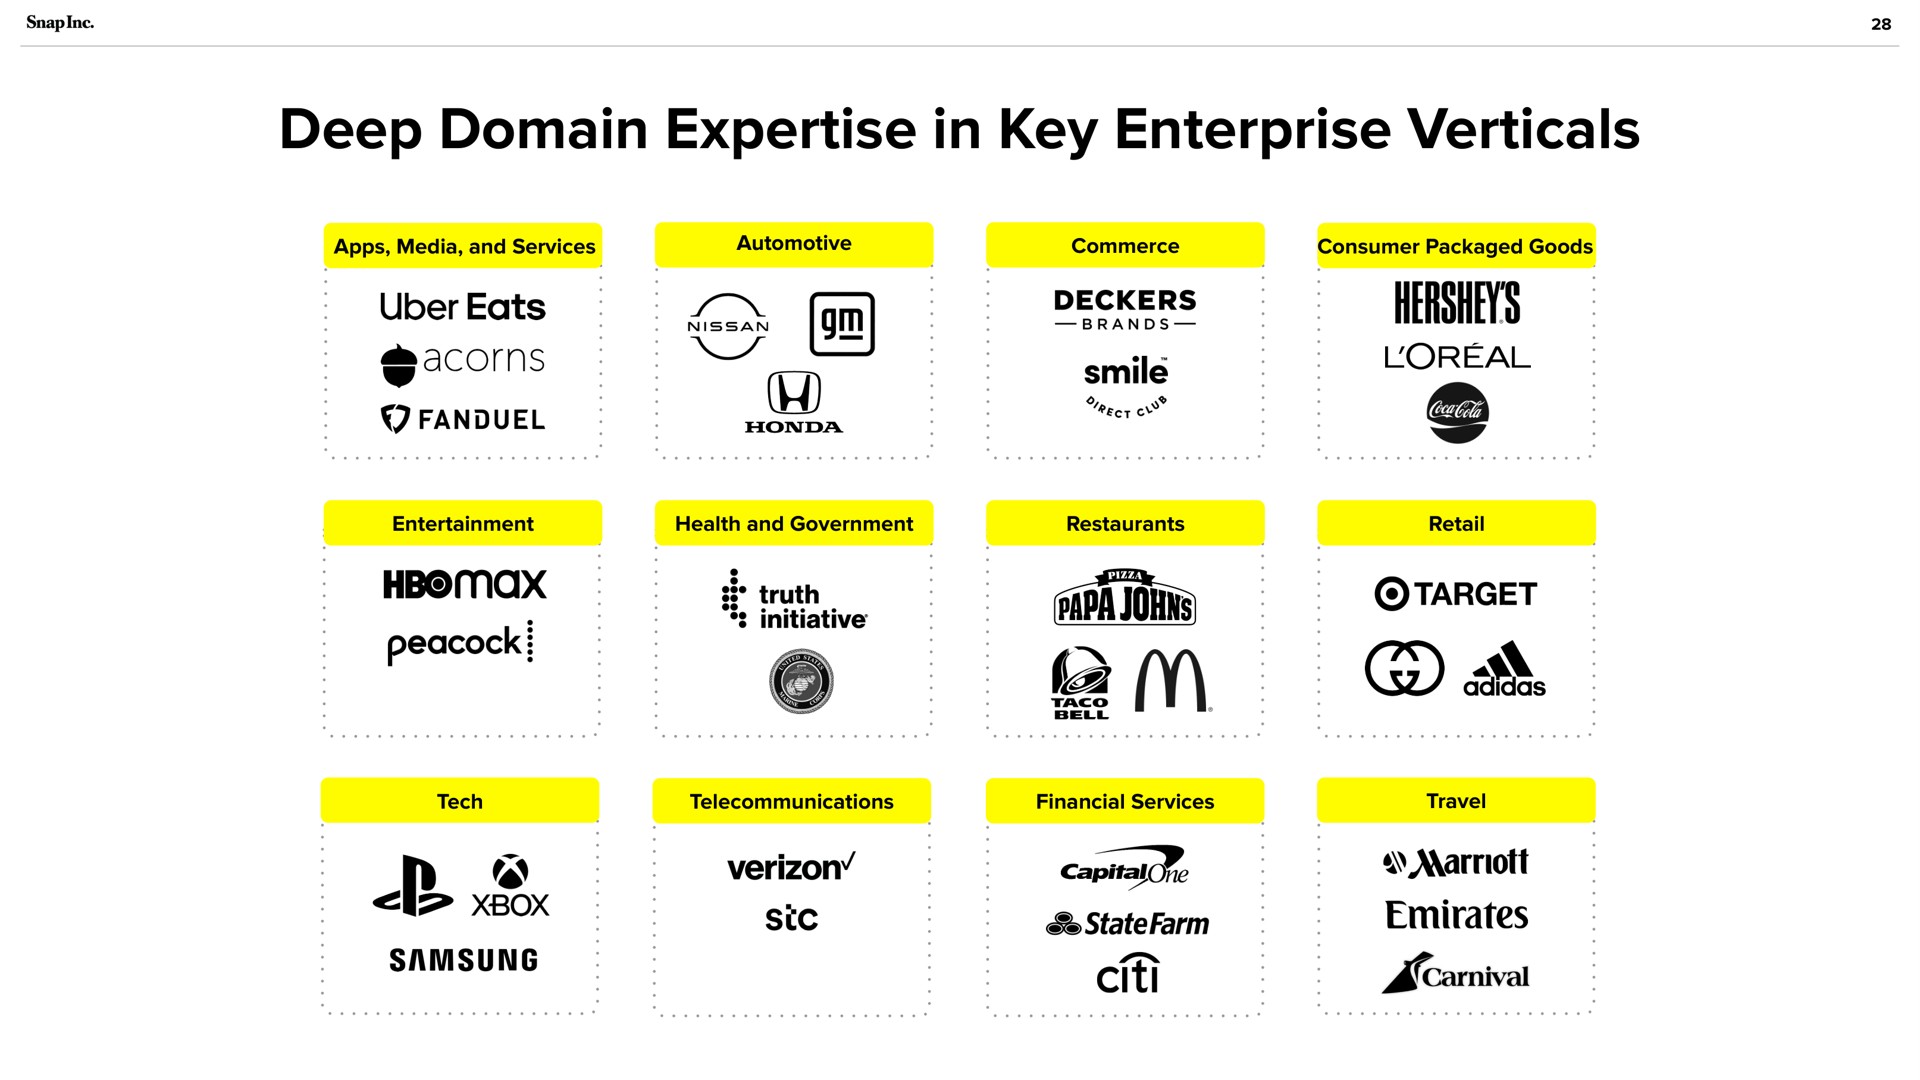 deep domain in key enterprise verticals peacock | Snap Inc